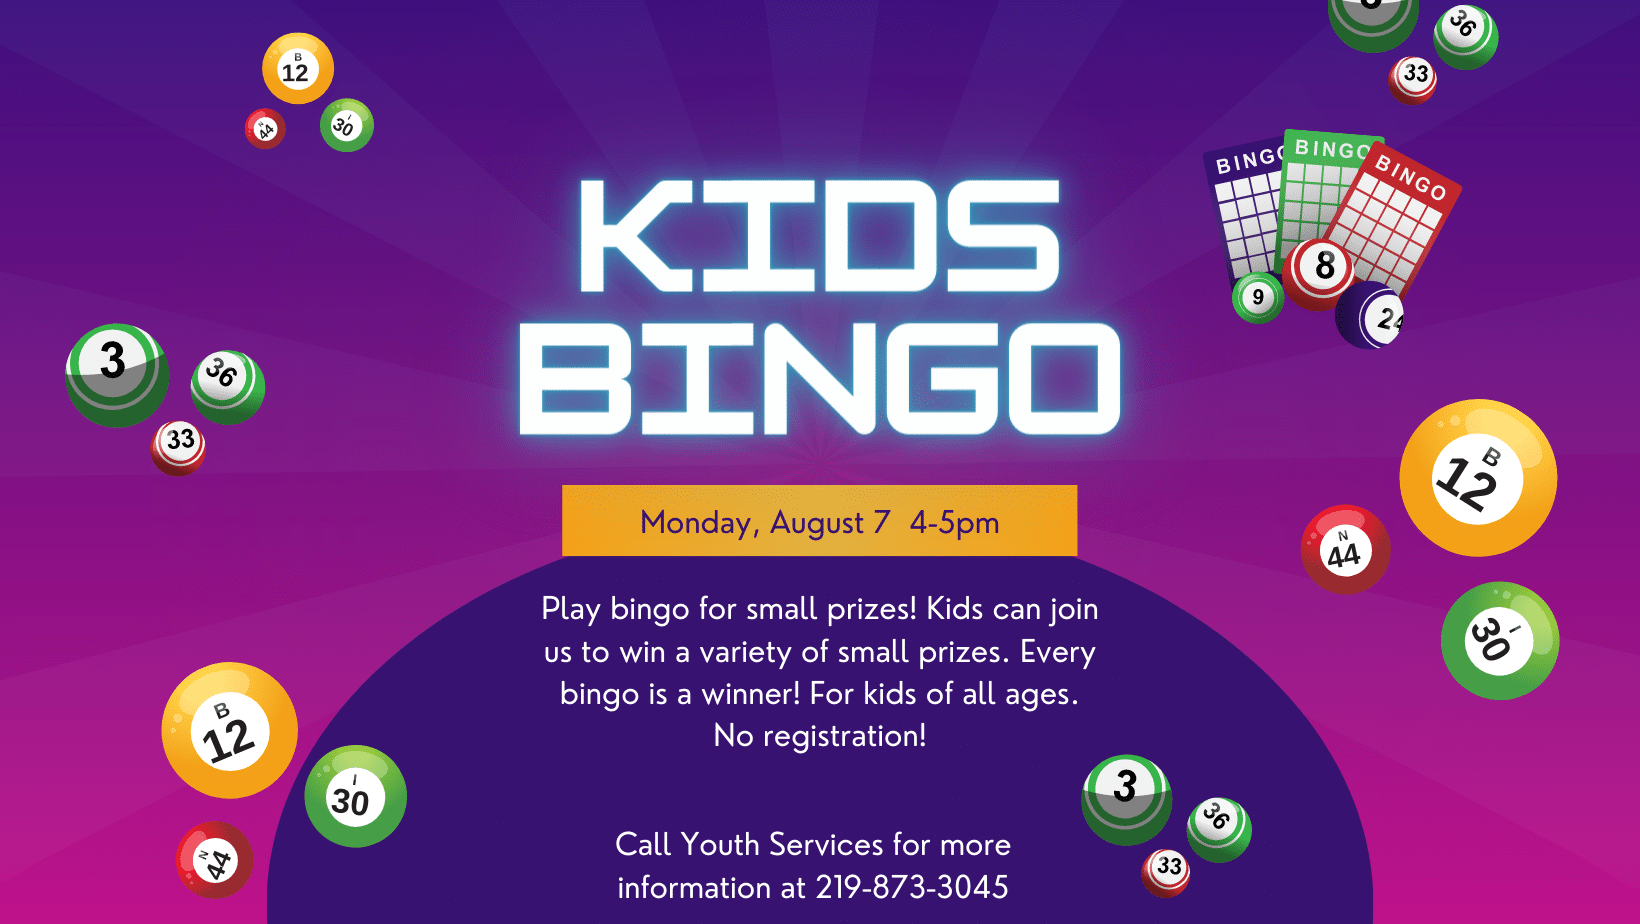 Kids Bingo, Monday, August 7 at 4:00 pm